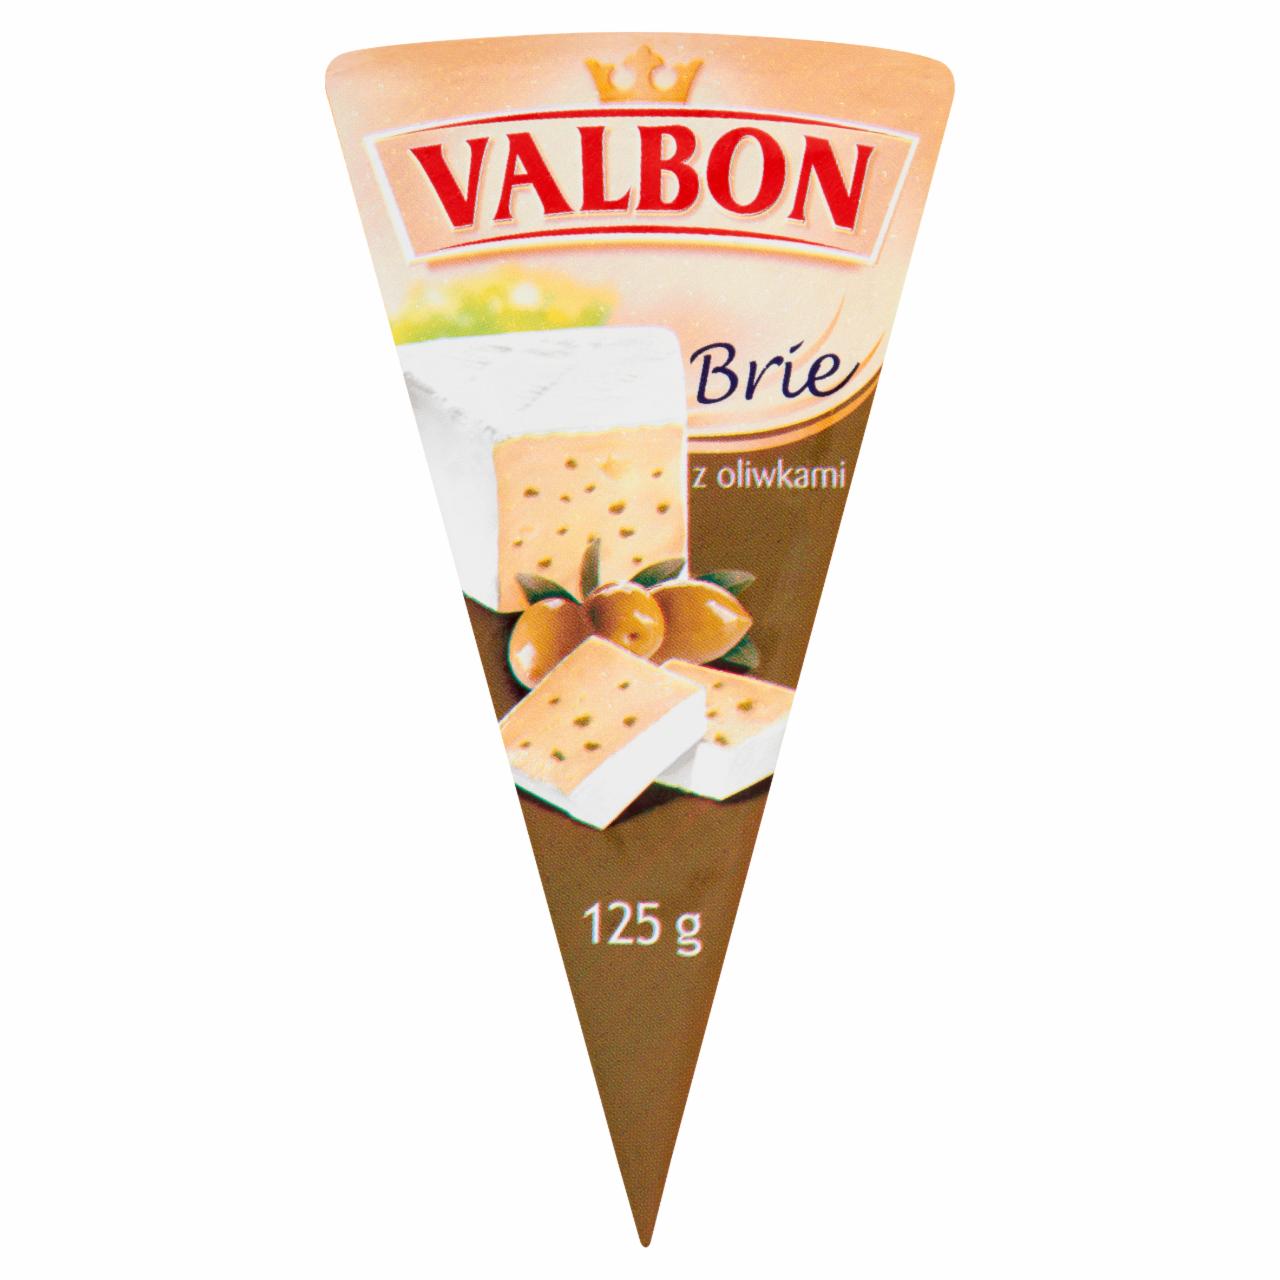 Zdjęcia - Valbon Brie z oliwkami 125 g